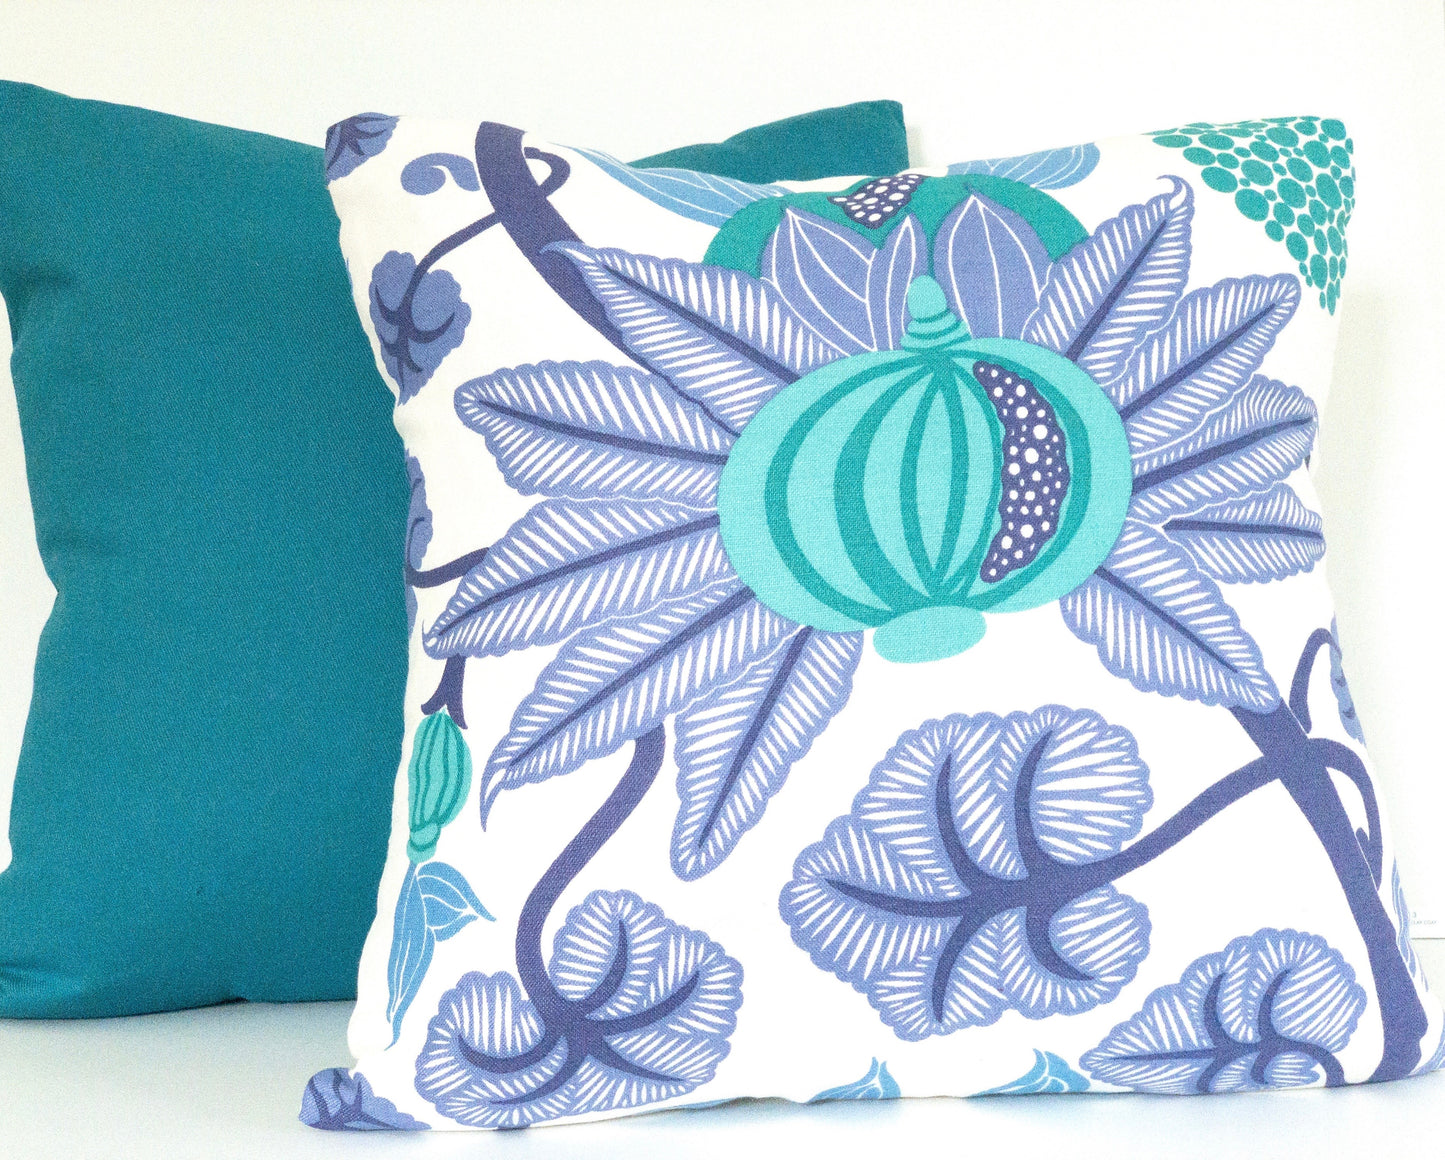 Blue and purple floral designer pillow